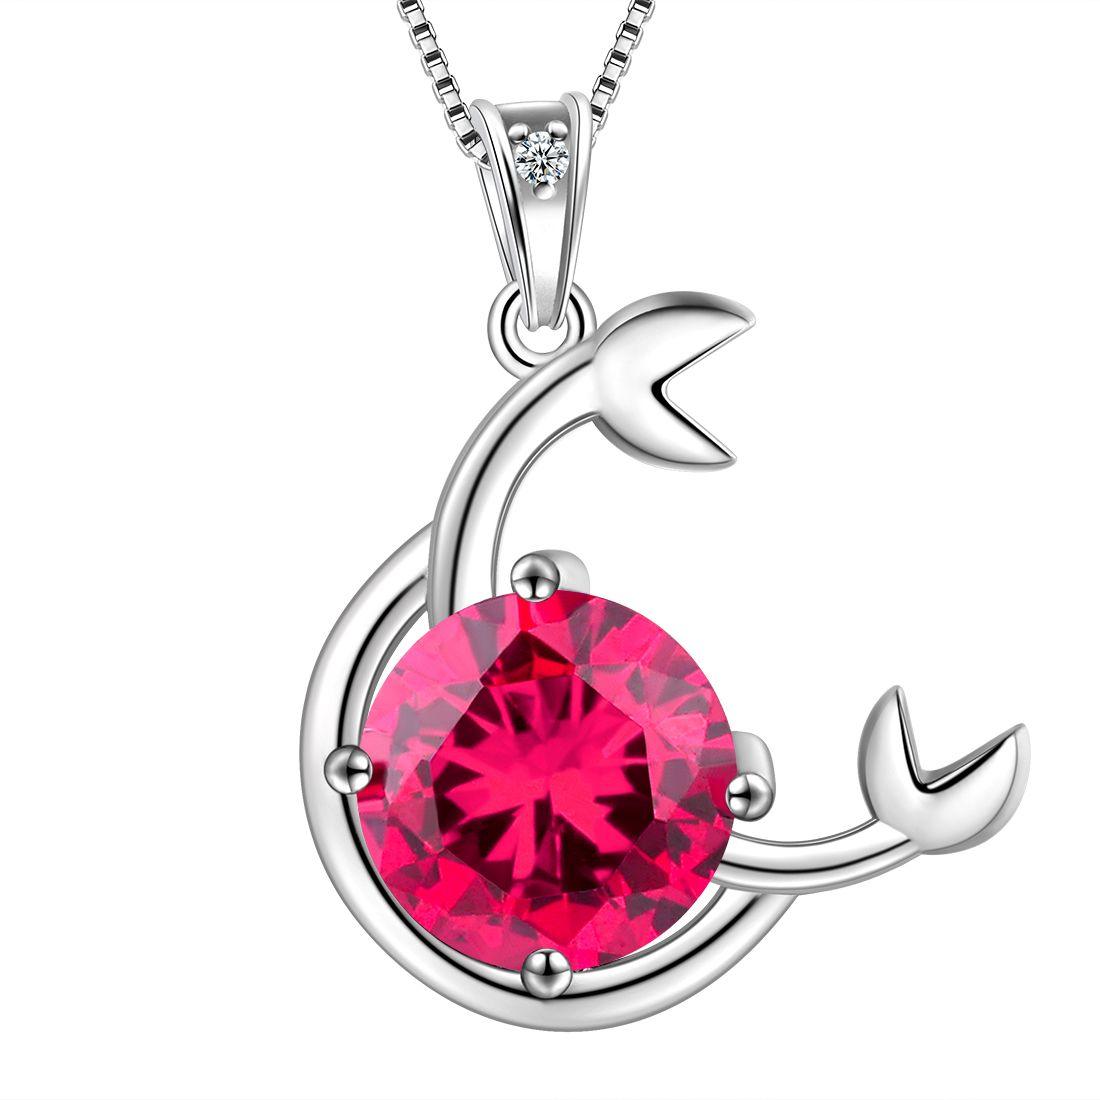 Zodiac Cancer Necklace July Birthstone Pendant Crystal - Necklaces - Aurora Tears